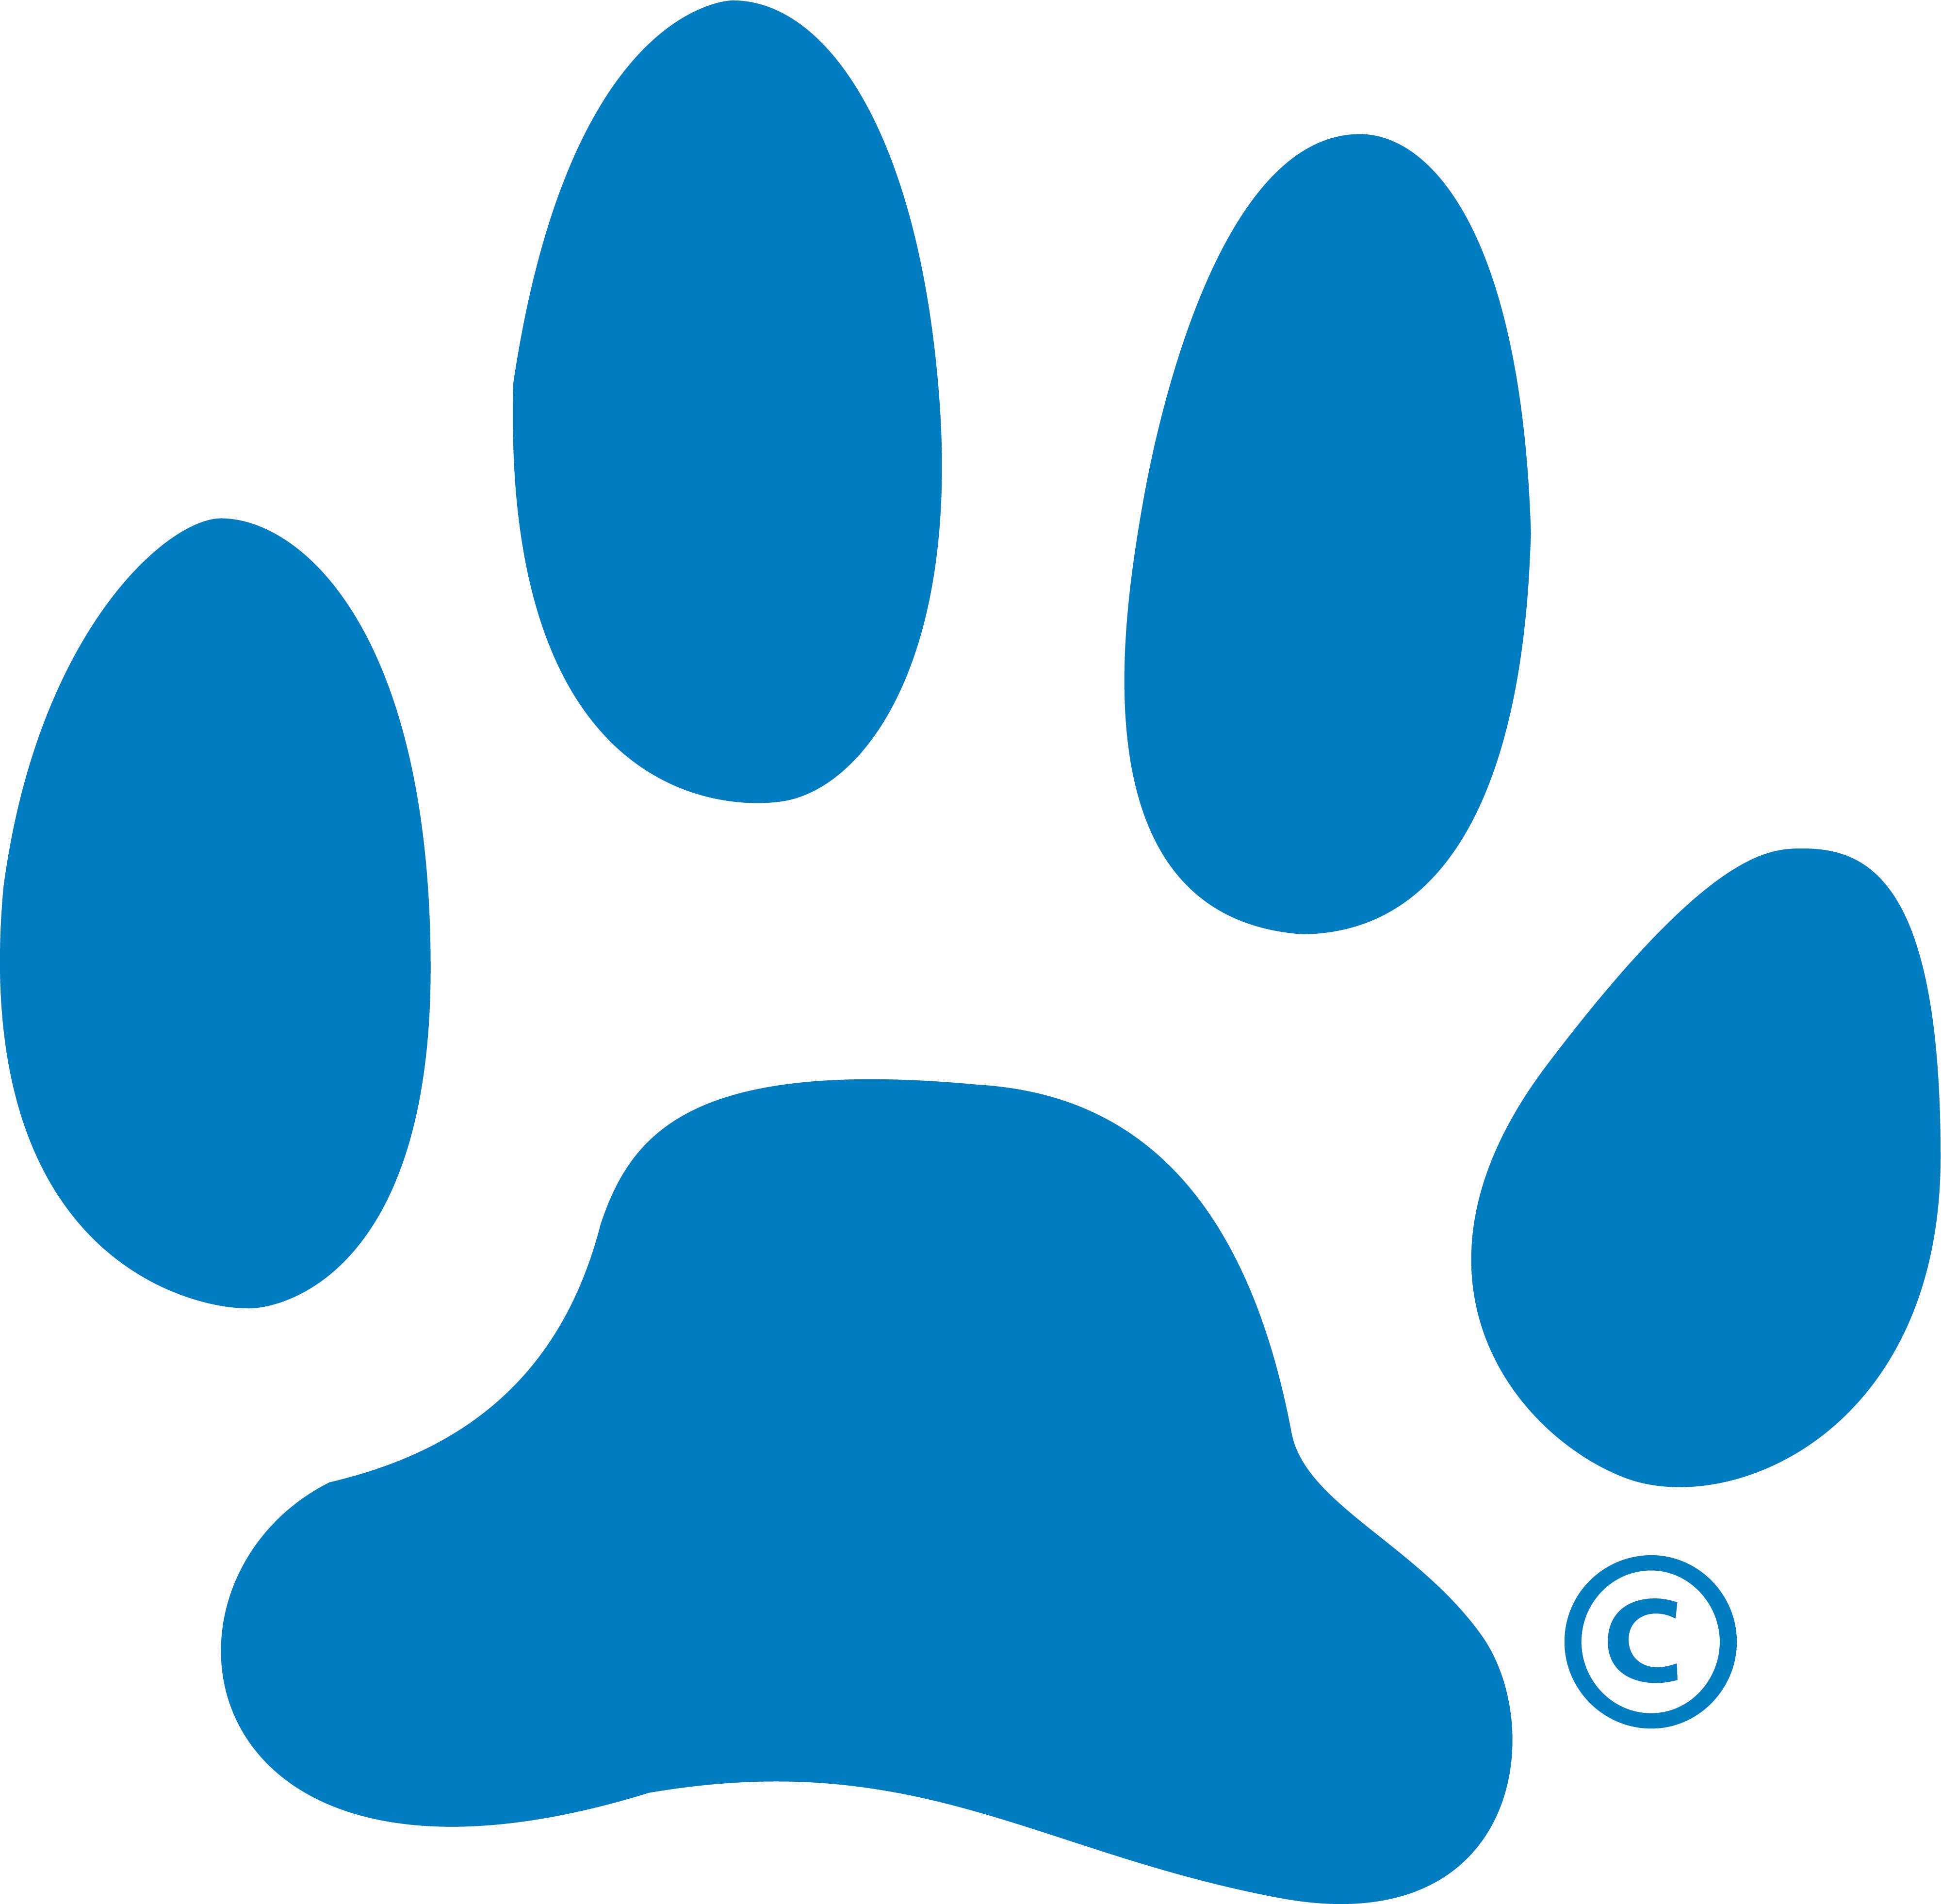 B Paw Logo - Red B and blue paw logo